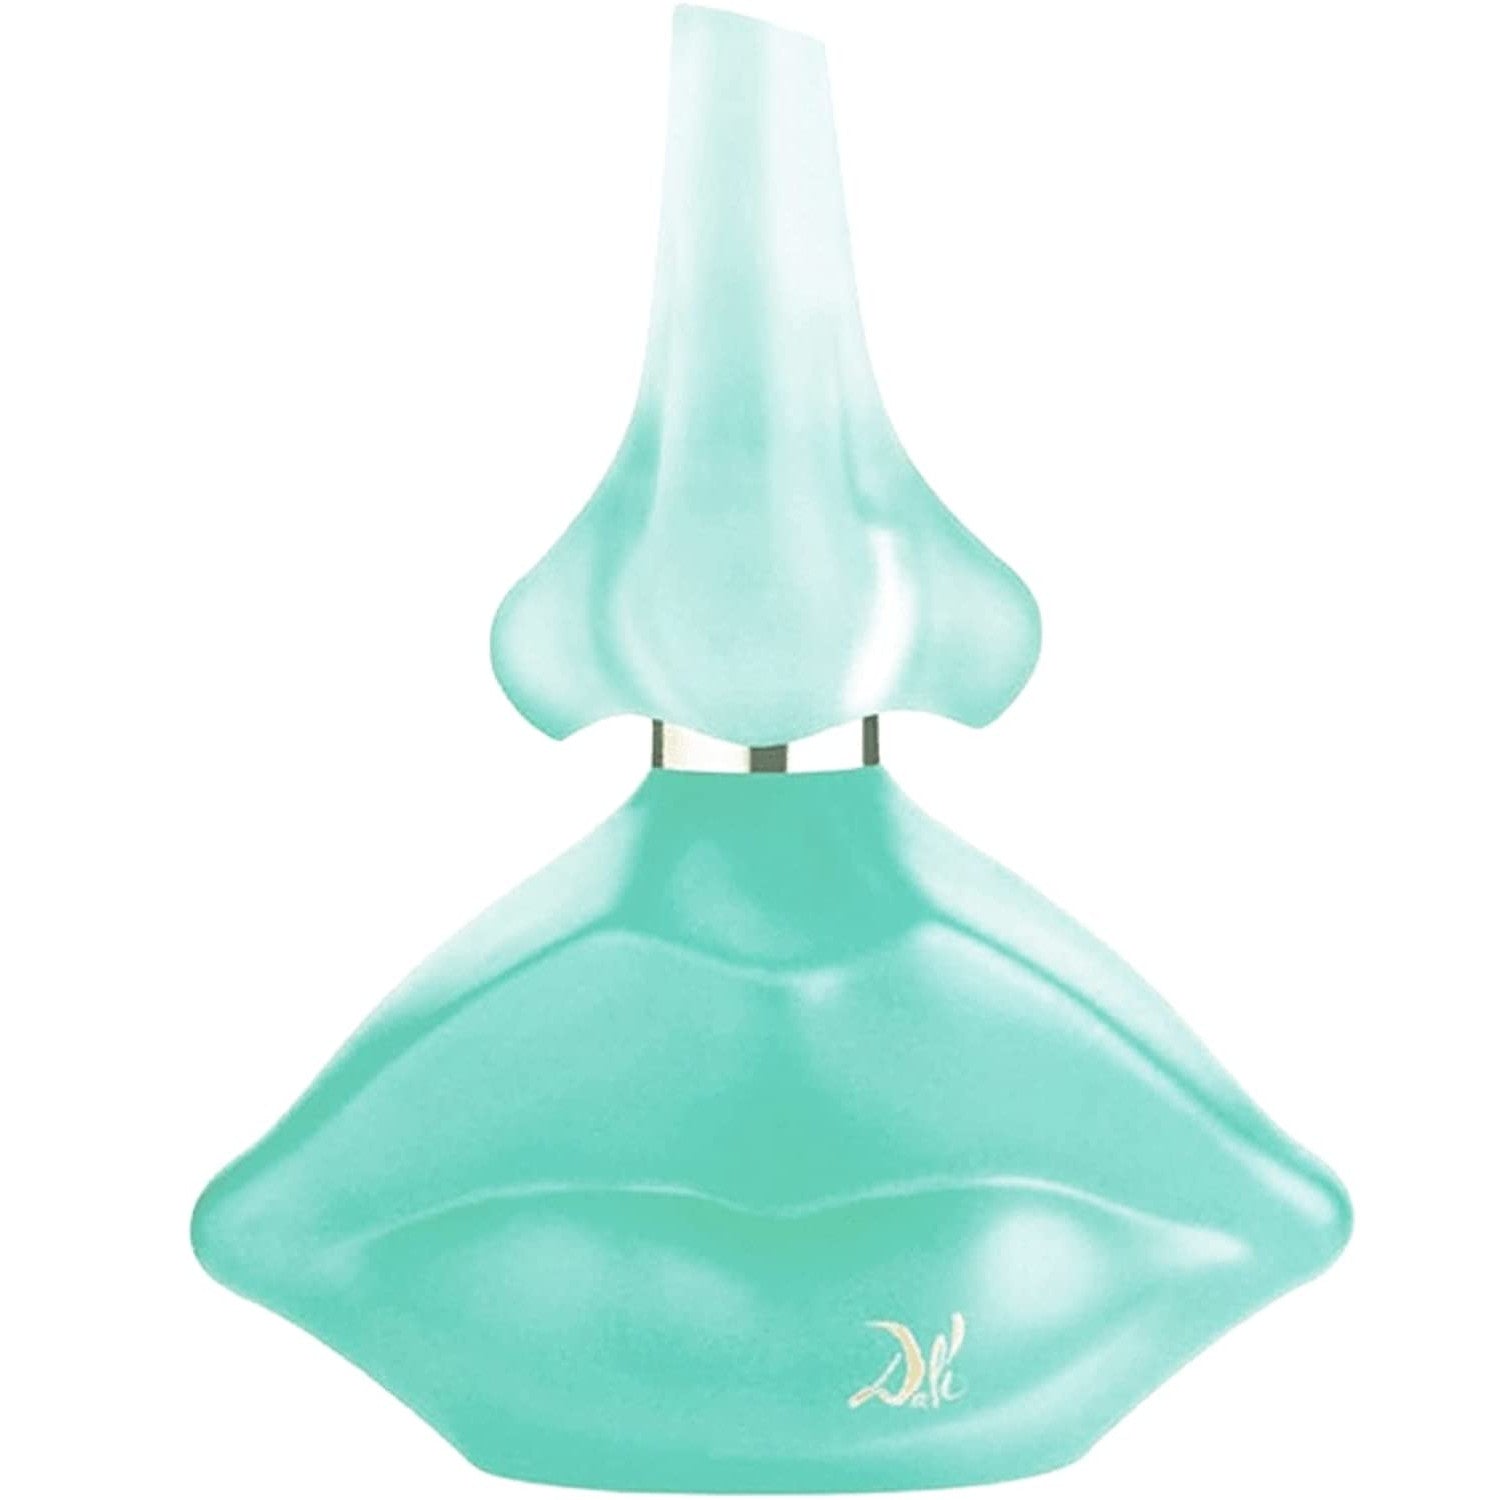 Salvador Dali Laguna For Women- Eau de Toilette, 100ml - samawa perfumes 